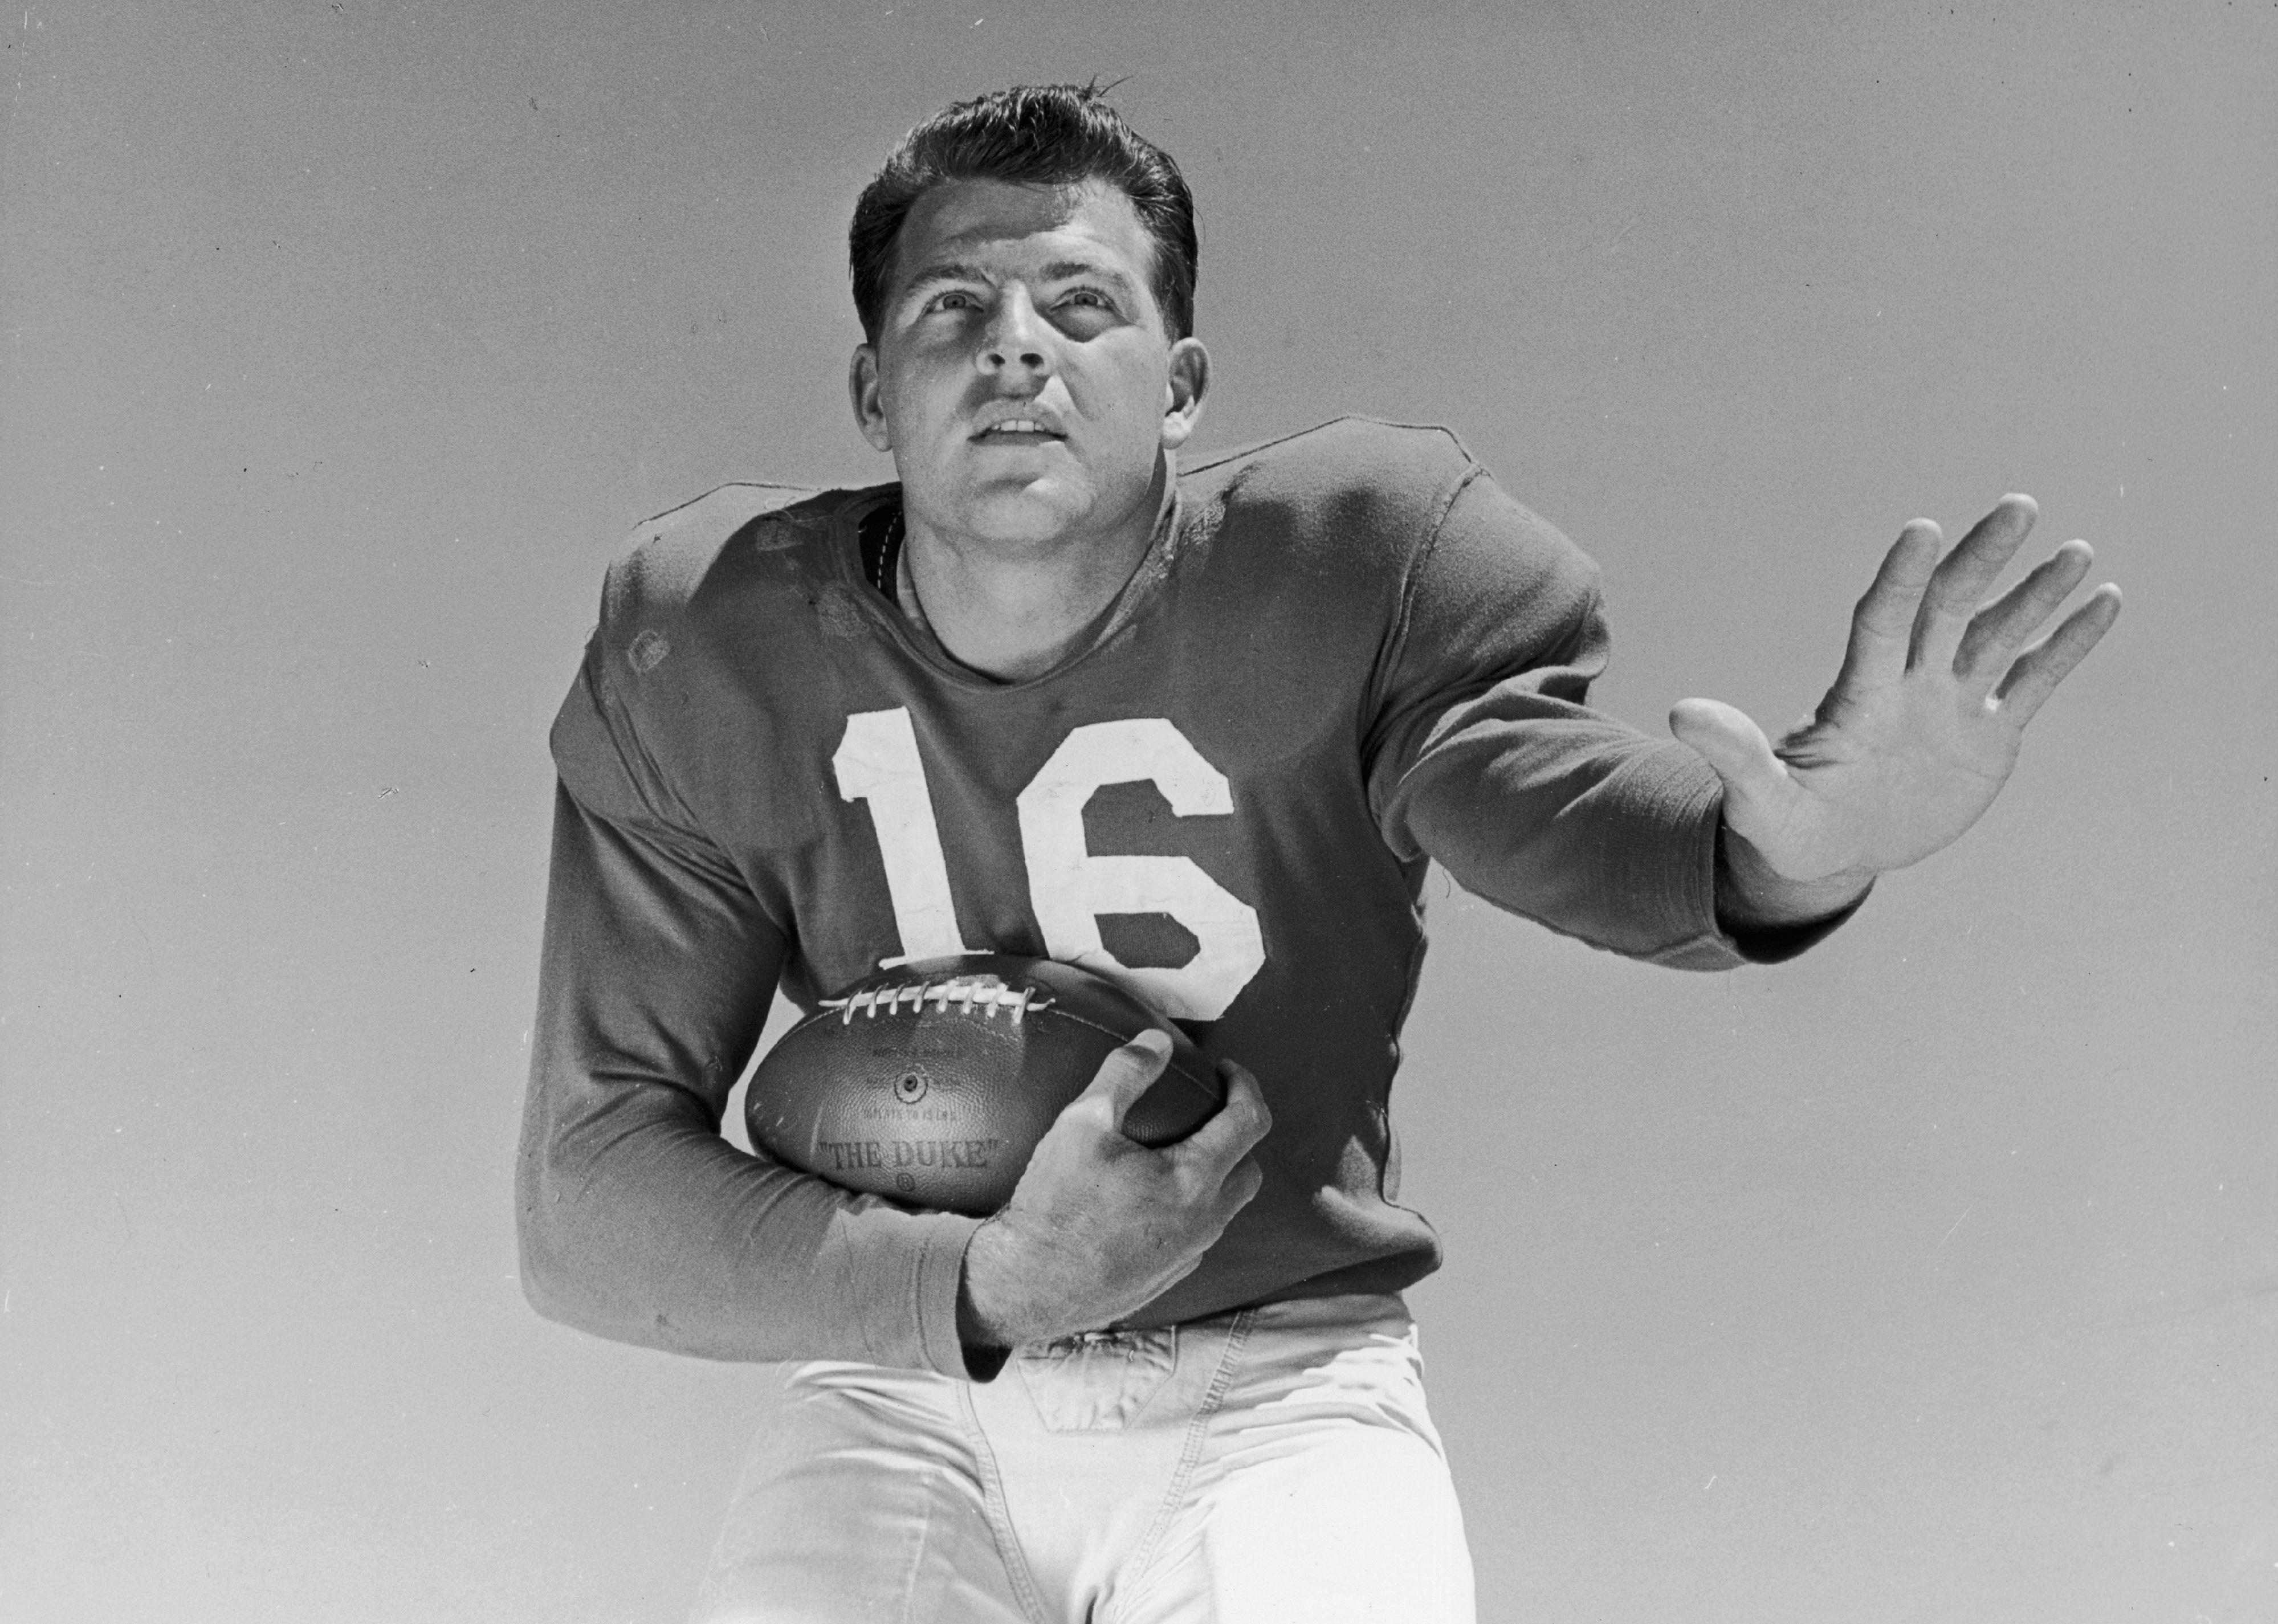 Portrait of New York Giants football player Frank Gifford